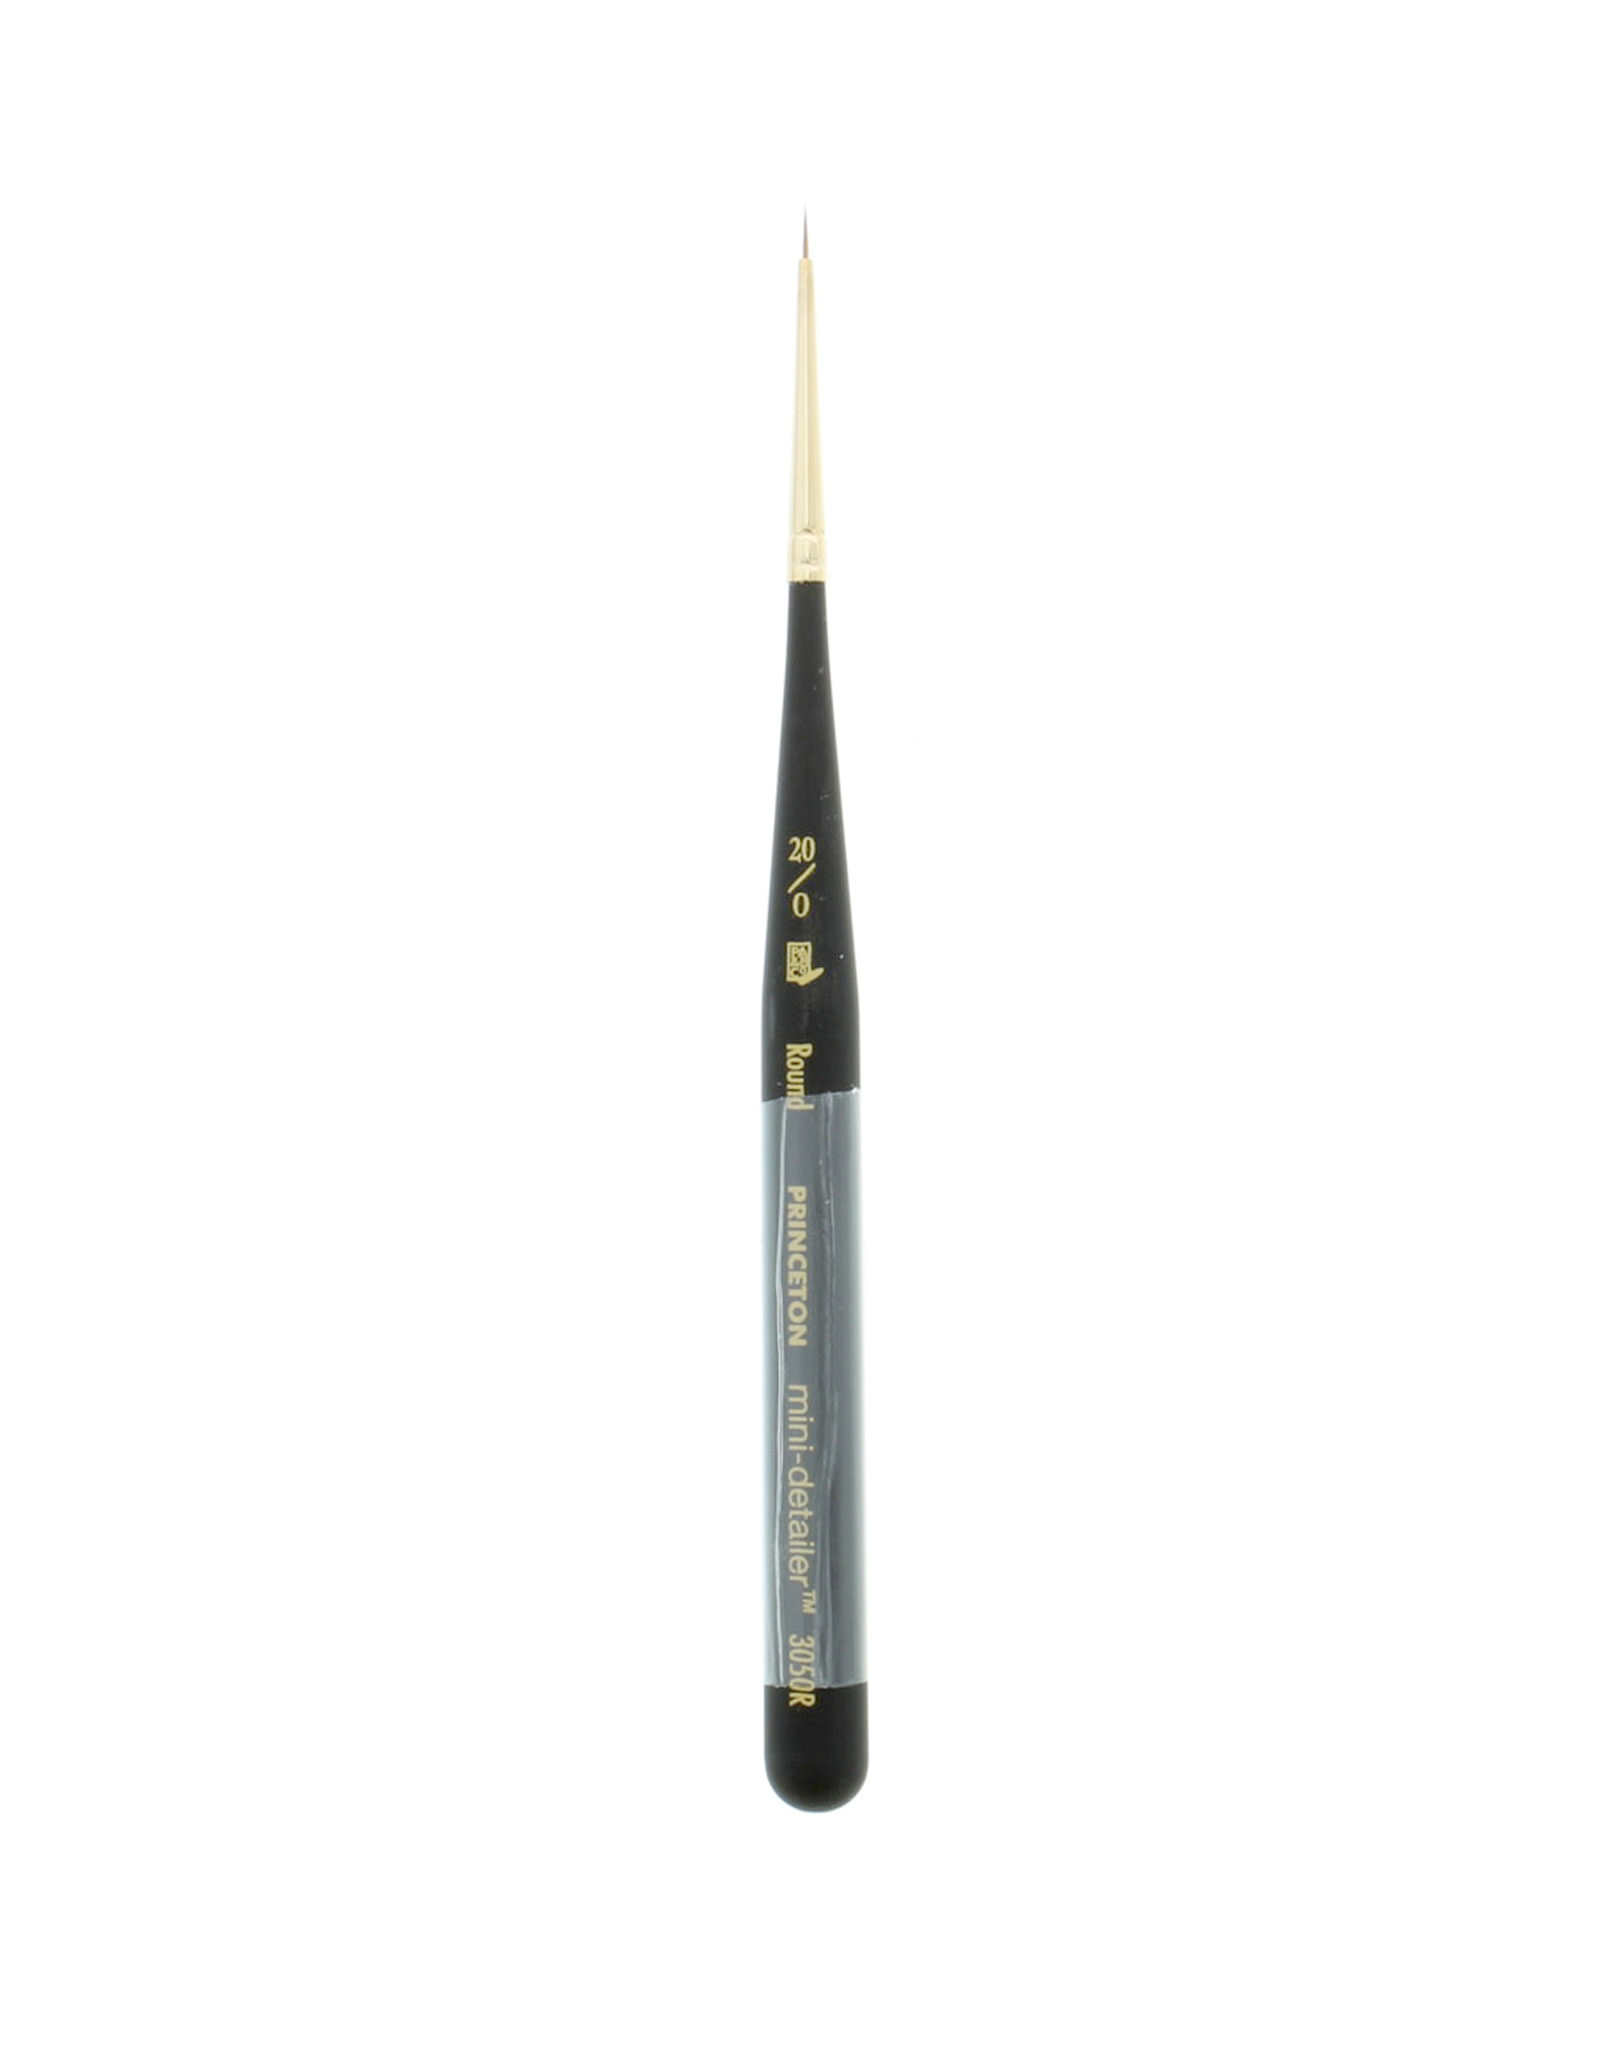 Princeton Brush Mini-Detailer Synthetic Sable Brush, Round, 20/0